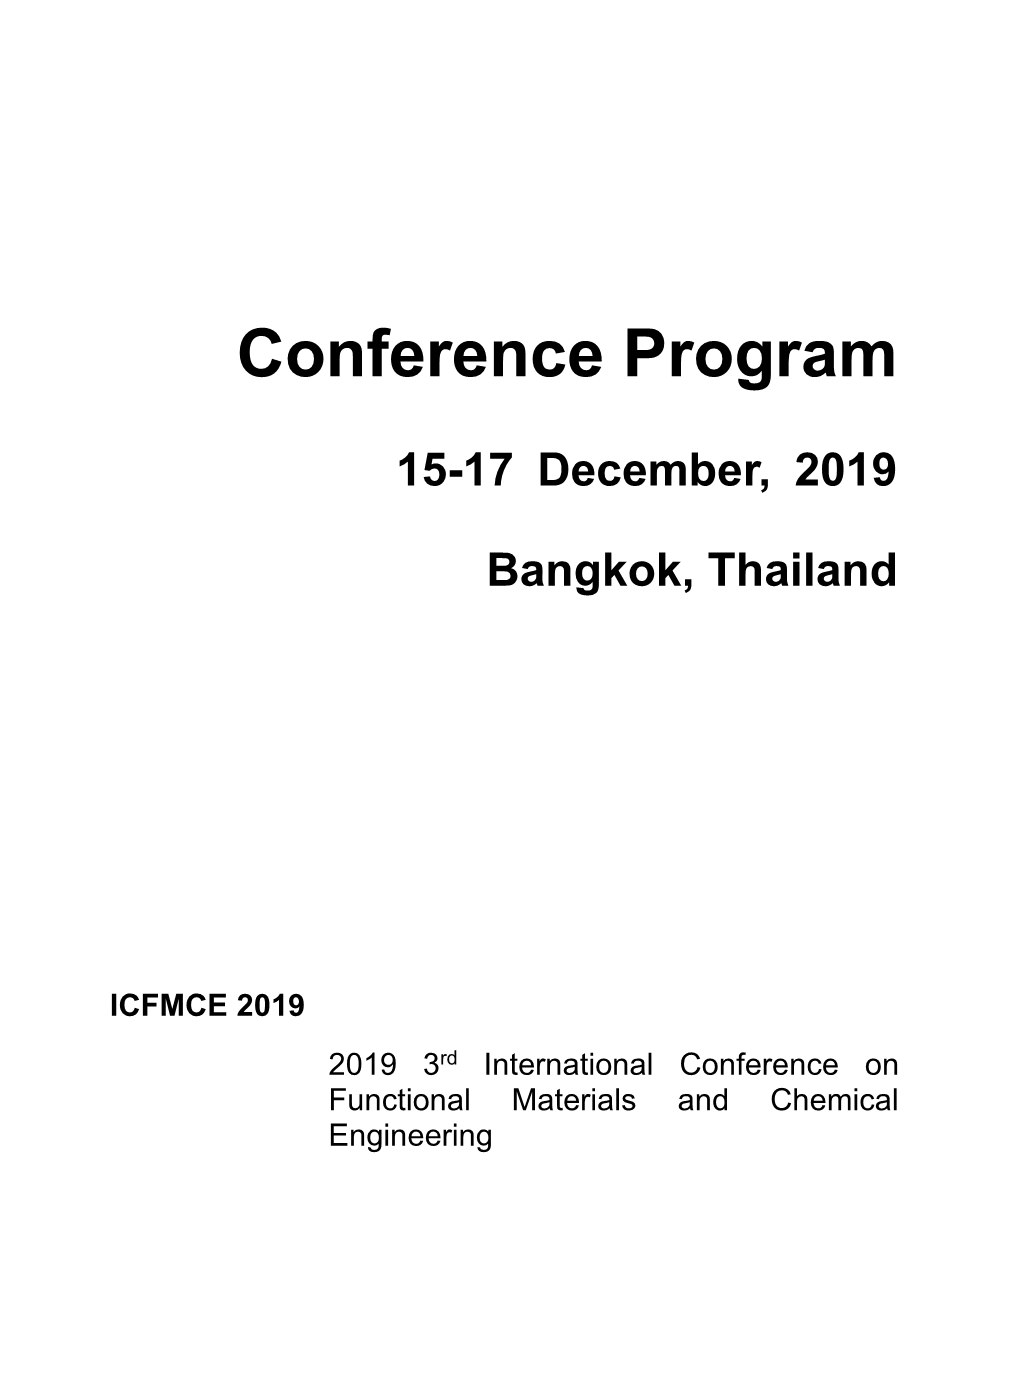 Conference Program 15-17 December, 2019 Bangkok, Thailand